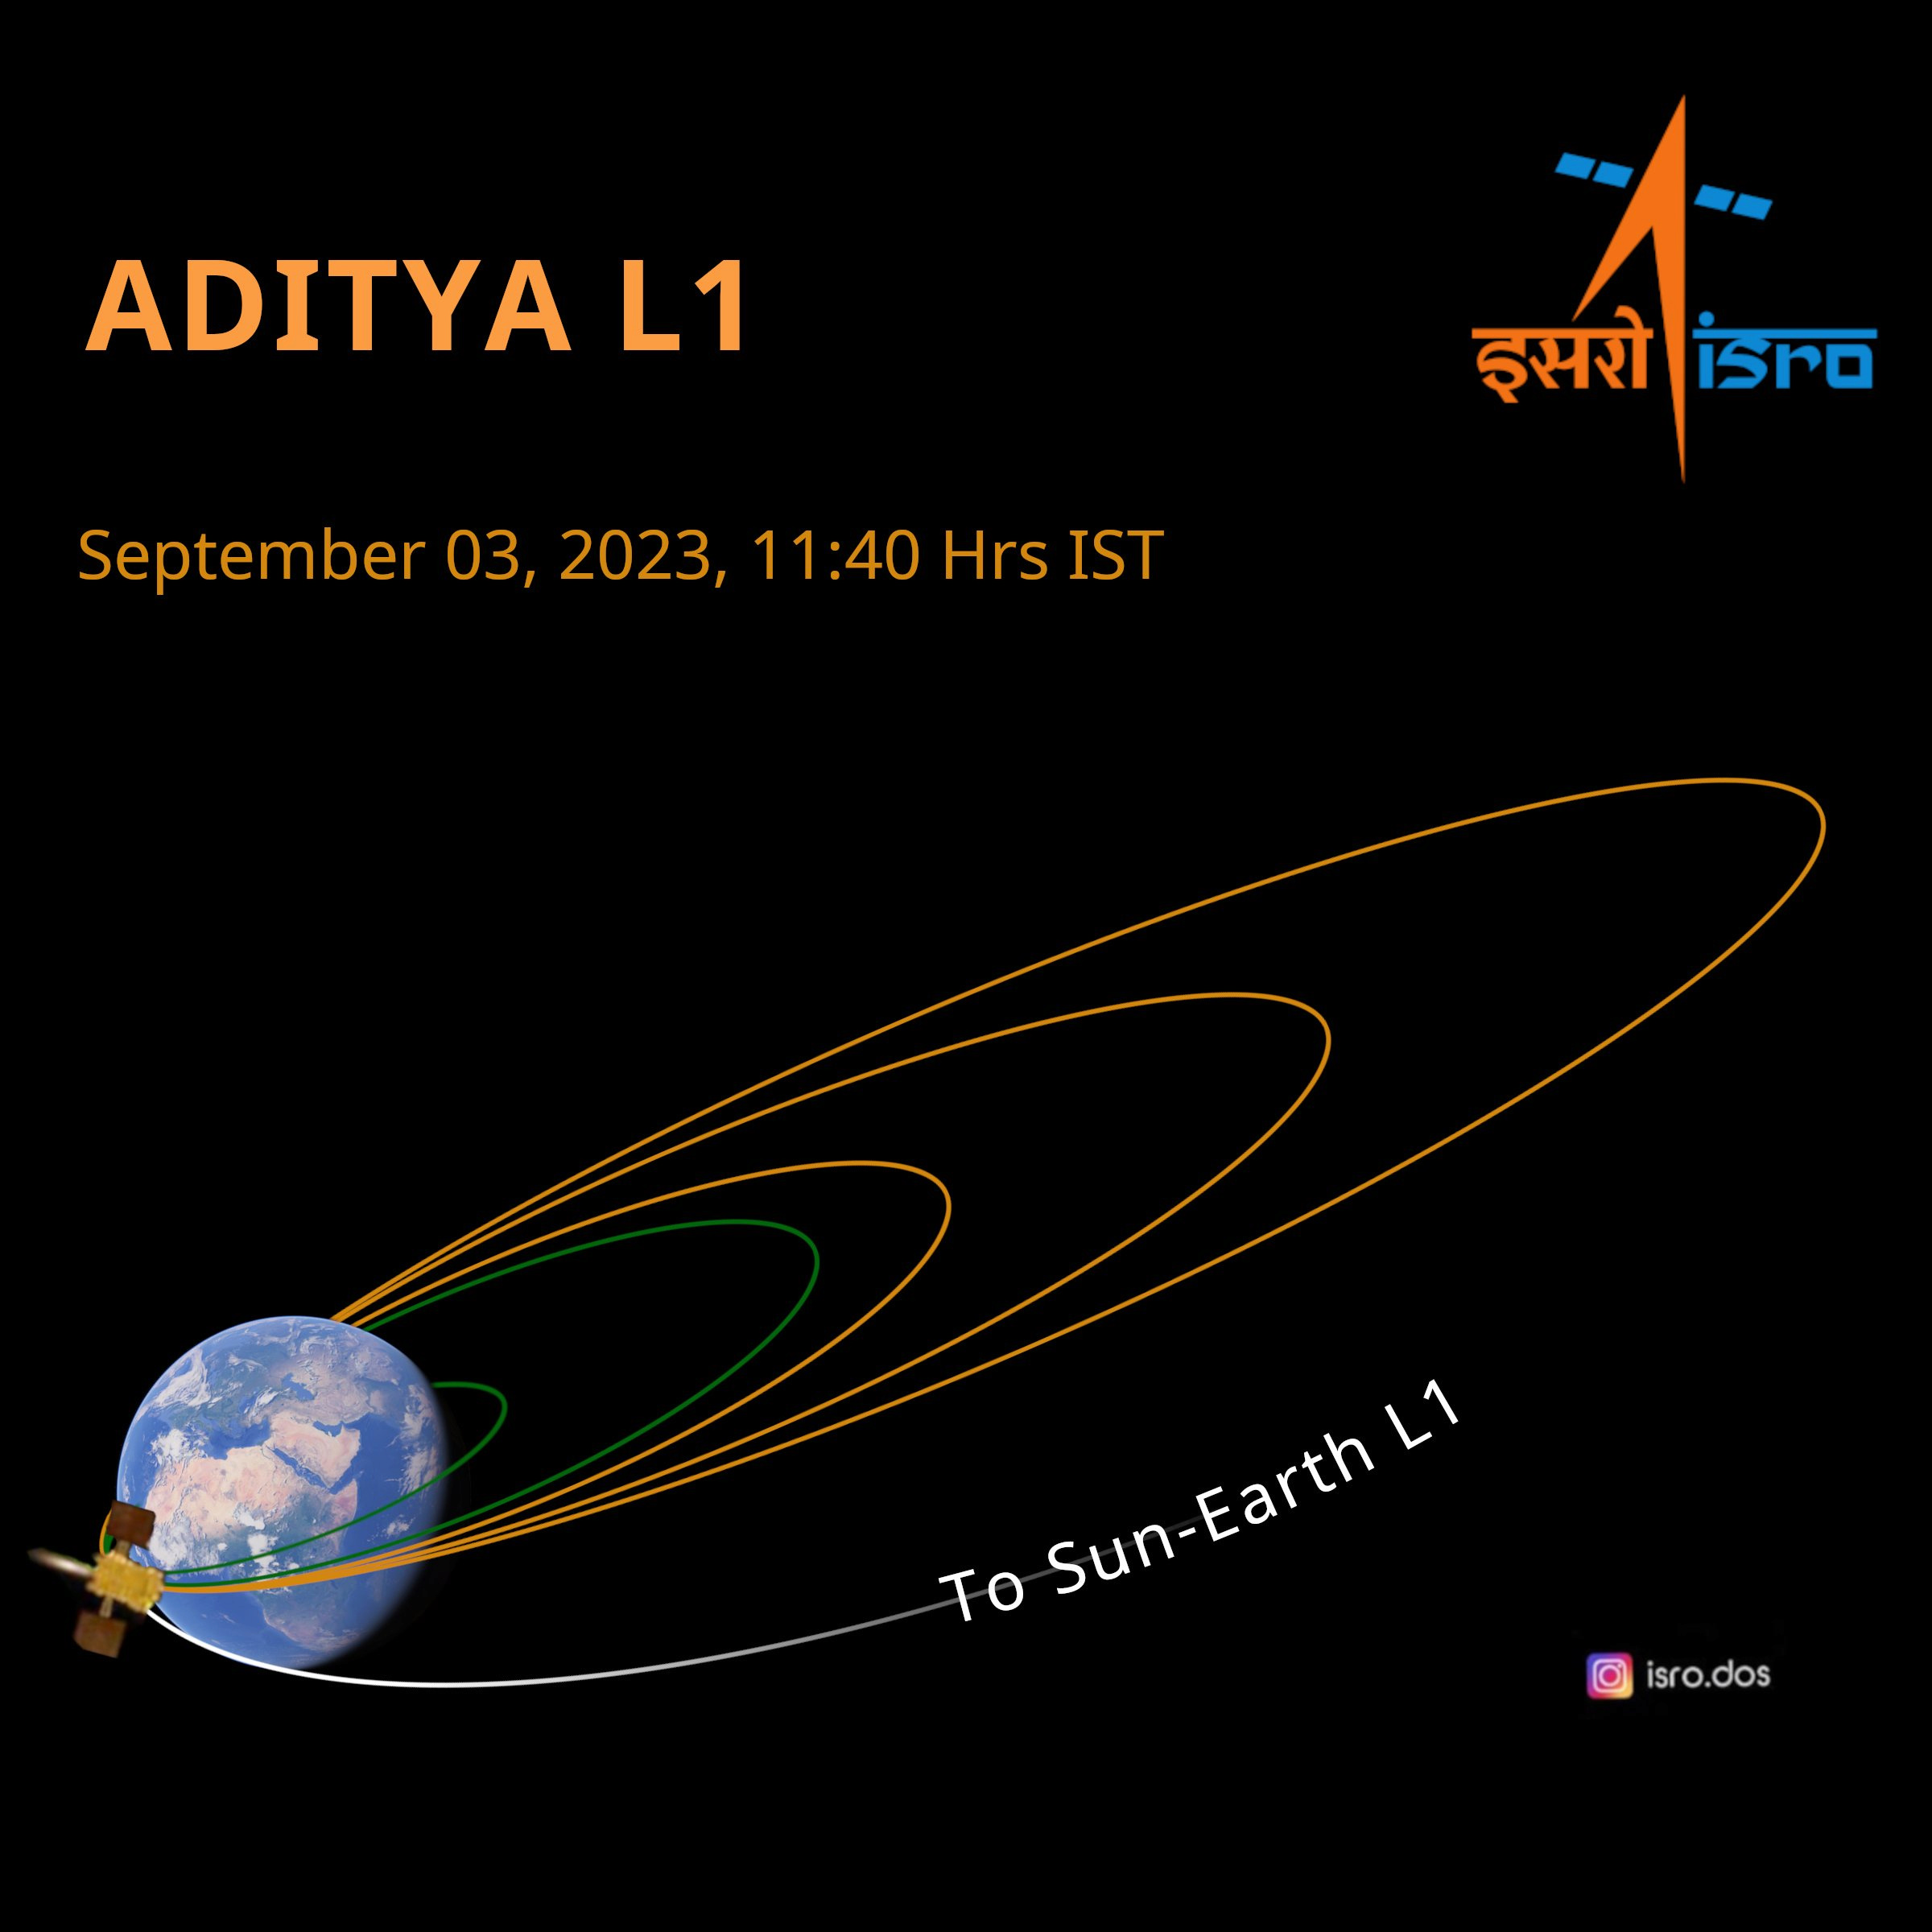 Suivi de la mission Aditya-L1 Image735